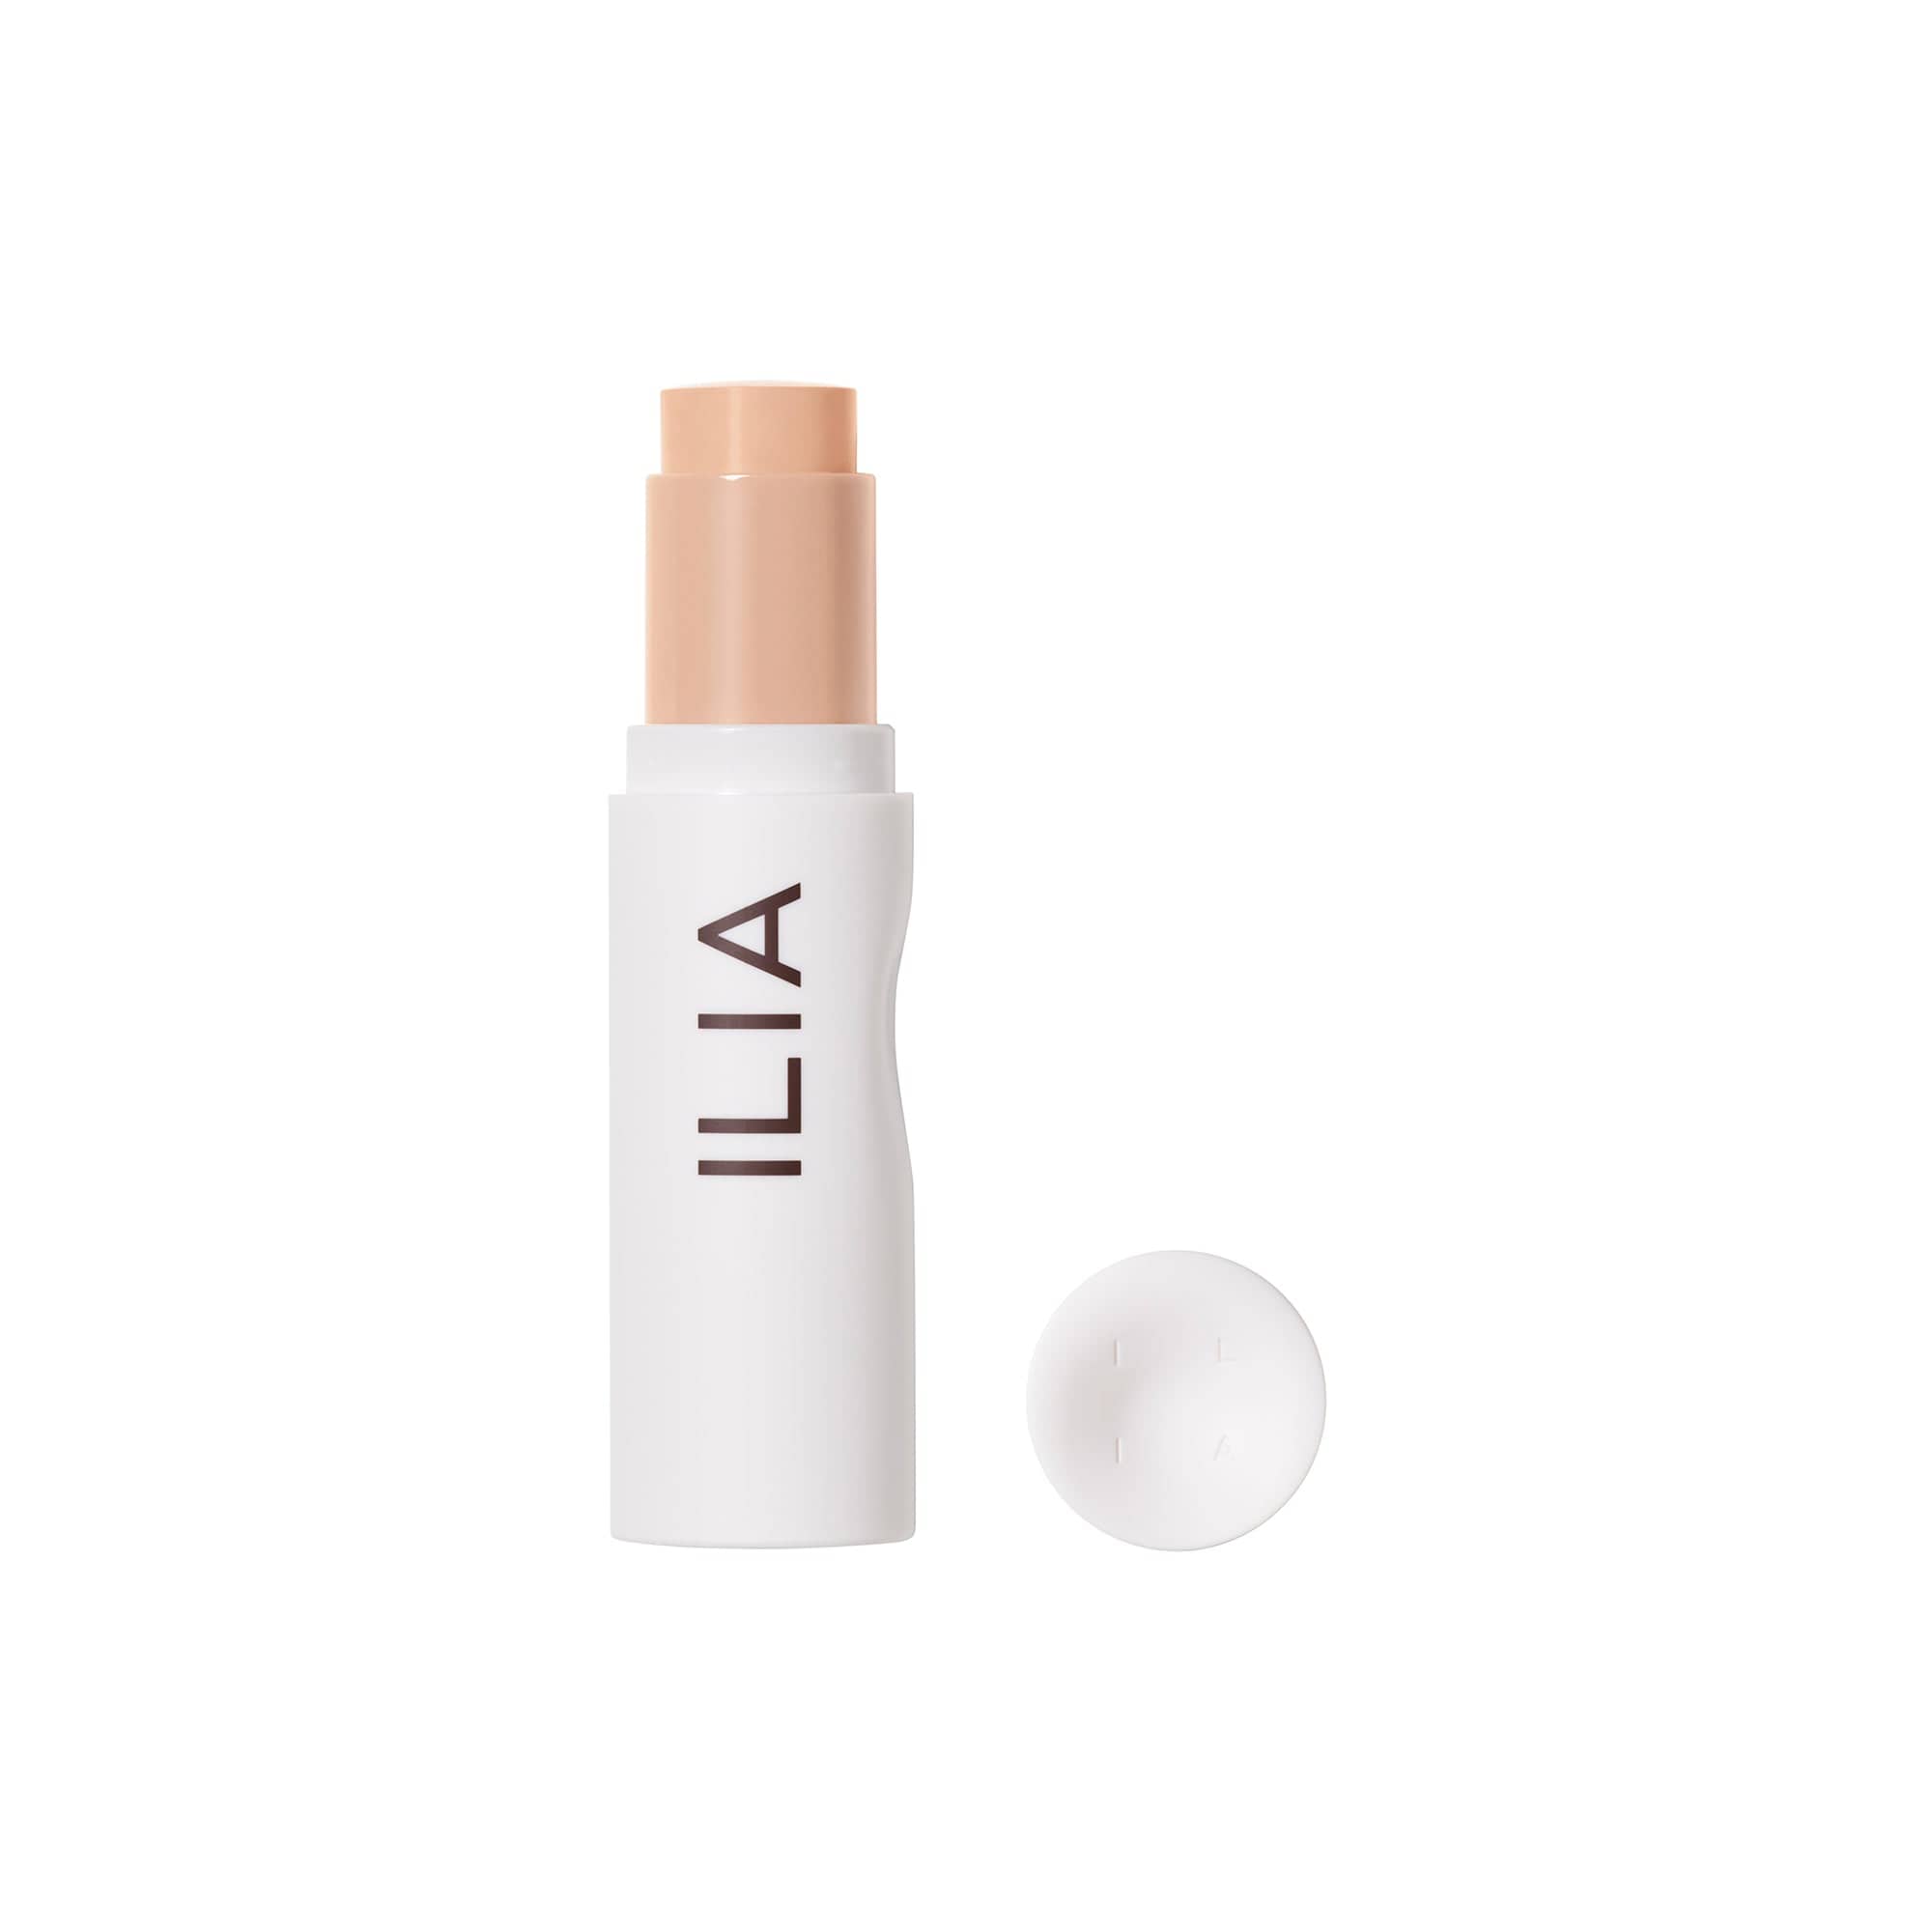 ILIA - Skin Rewind Complexion Stick - The Natural Beauty Club